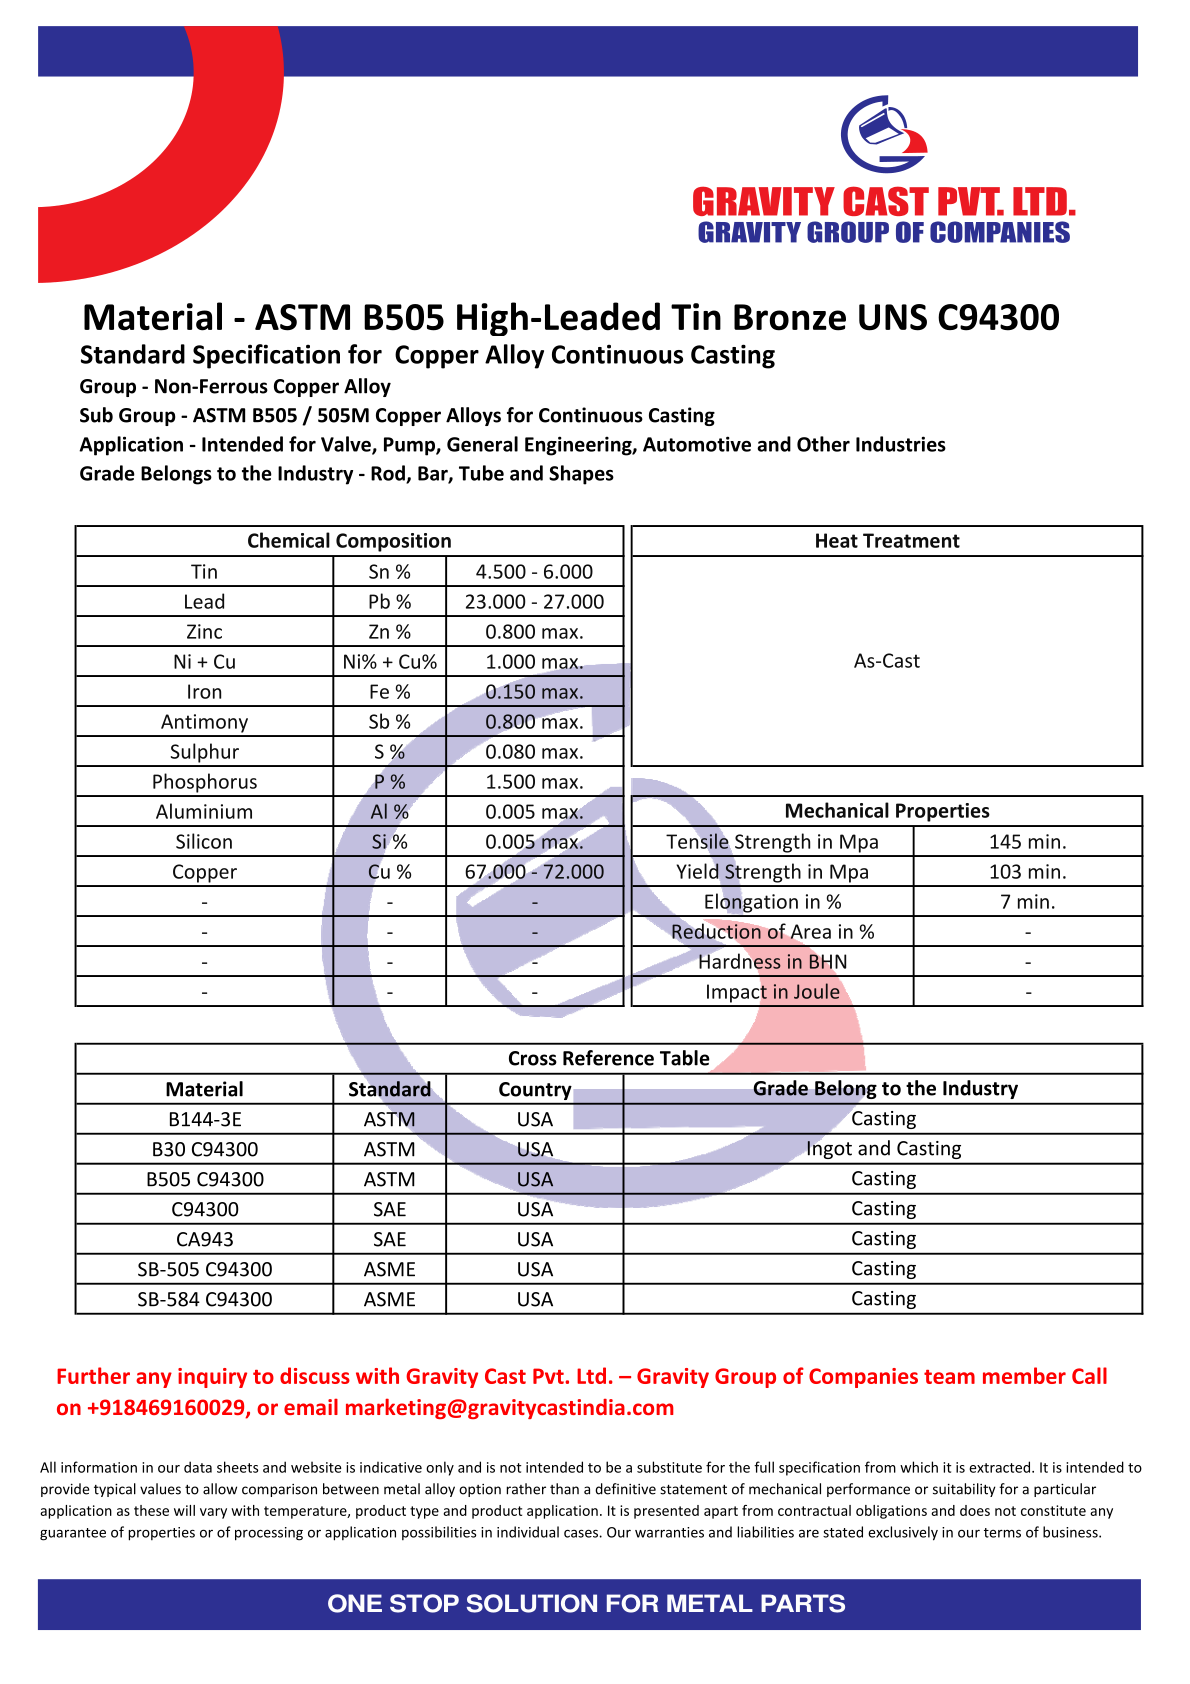 ASTM B505 High-Leaded Tin Bronze UNS C94300.pdf